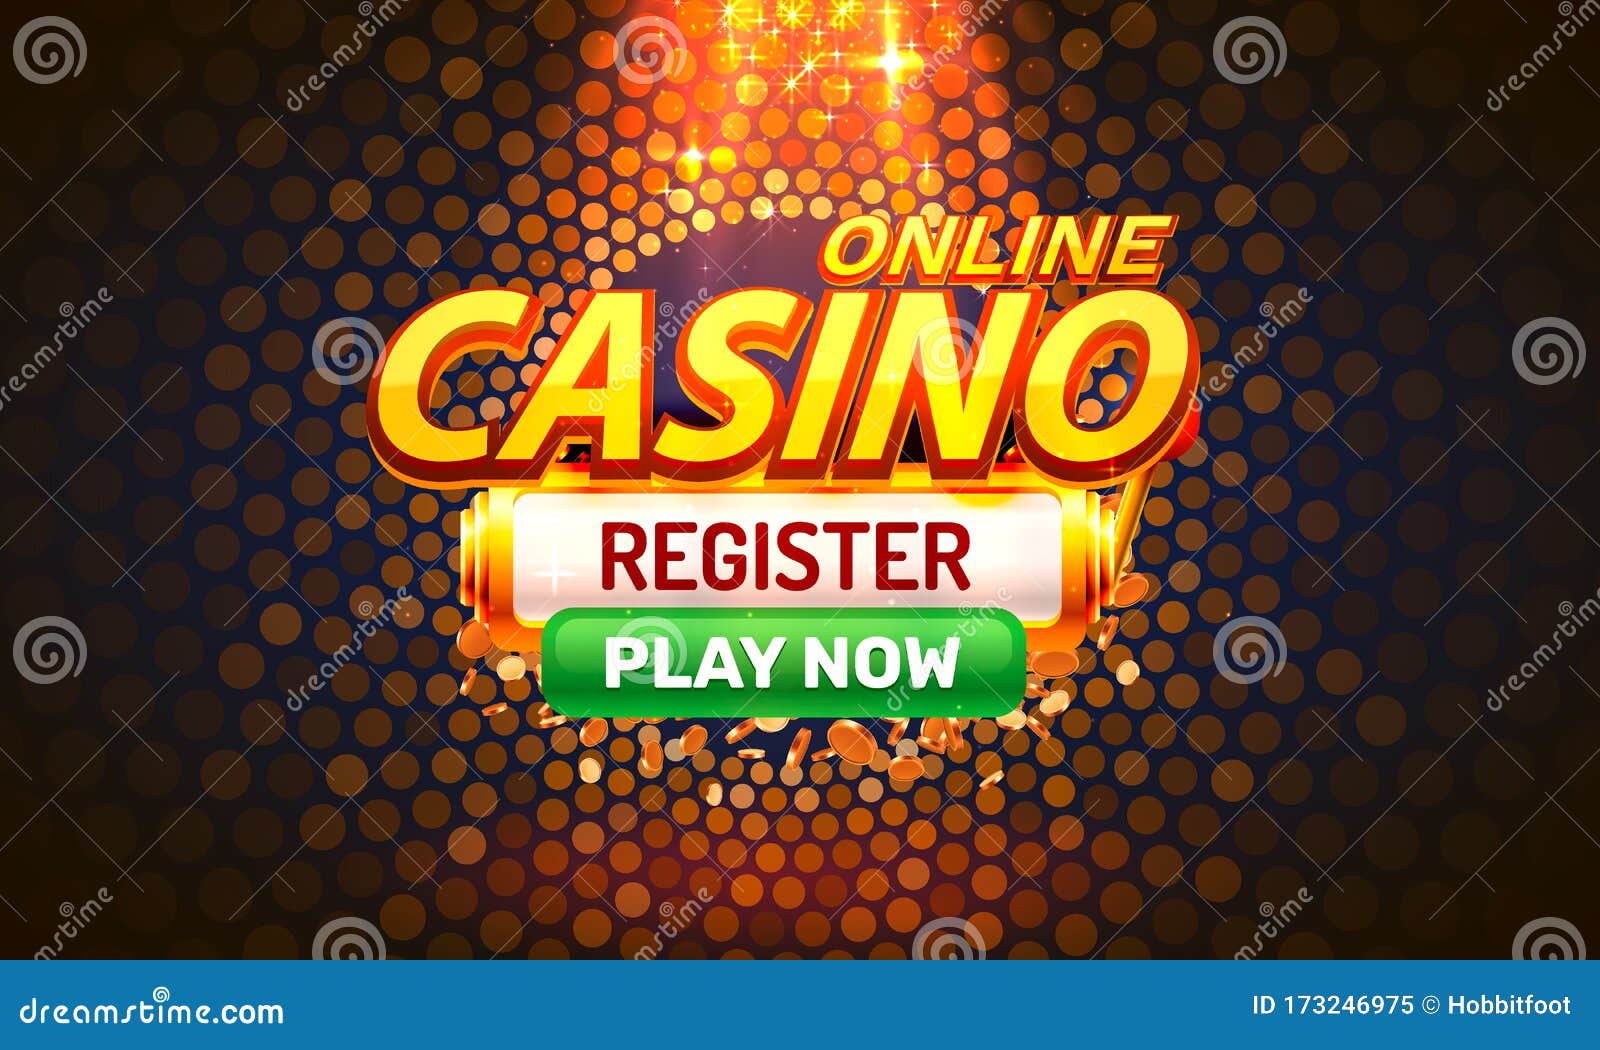 casino online play now